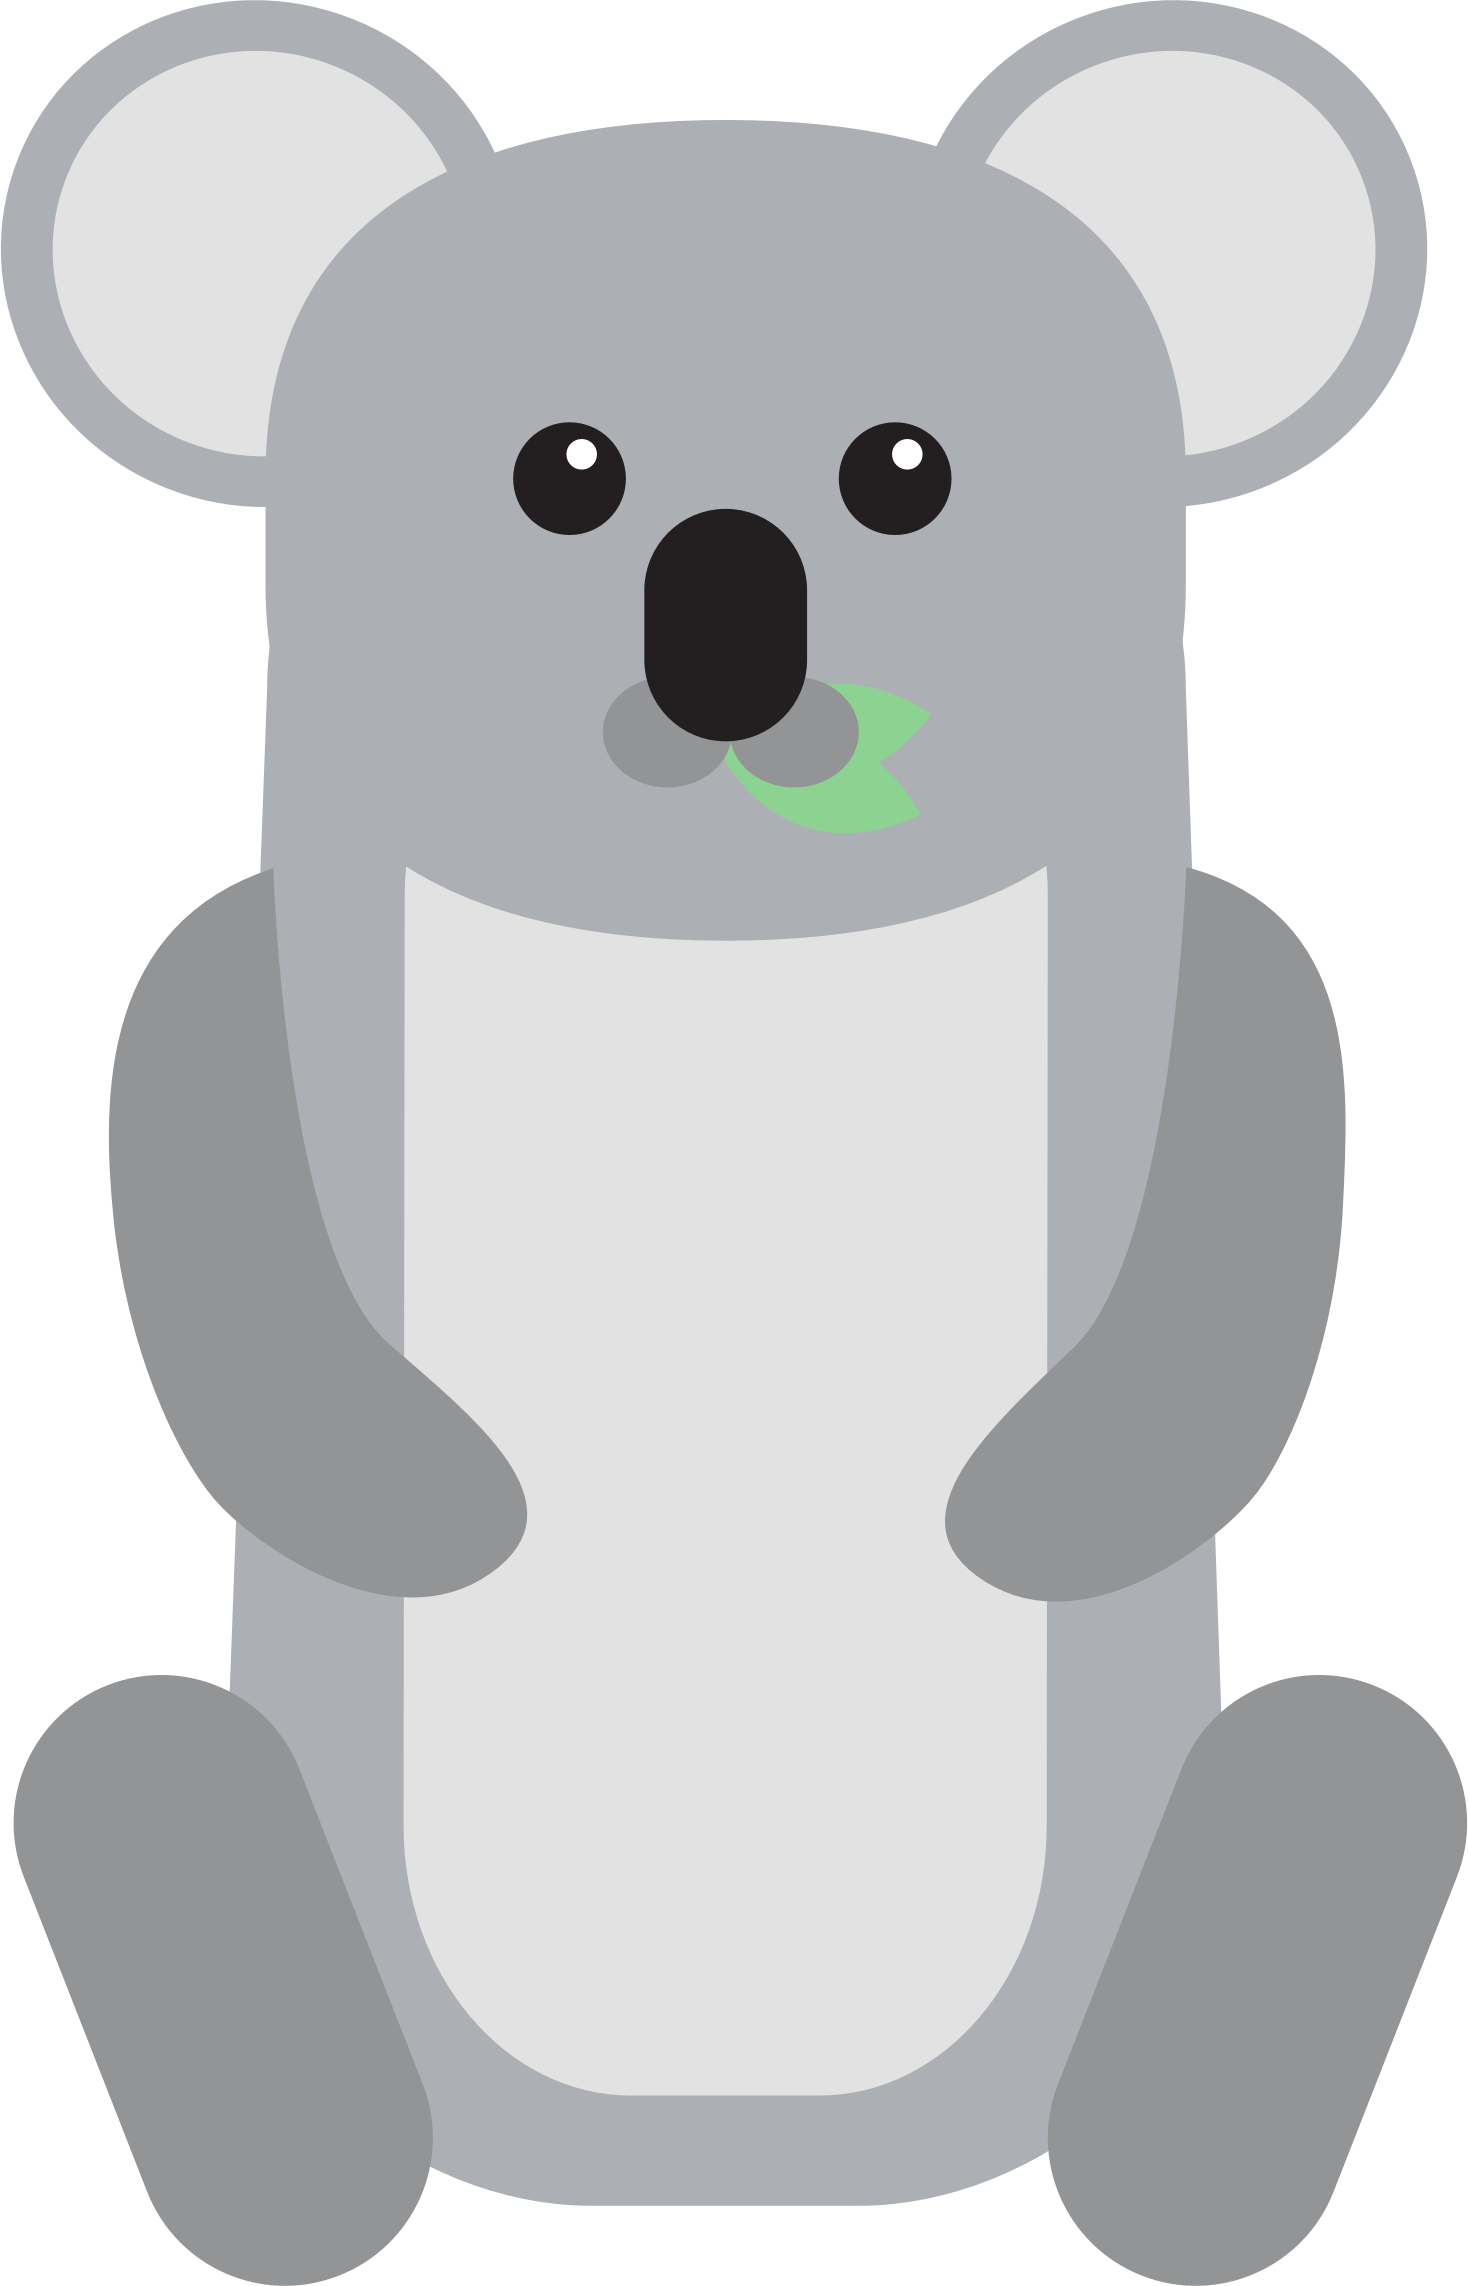 Big Image (Png) - Baby Koala, Transparent background PNG HD thumbnail